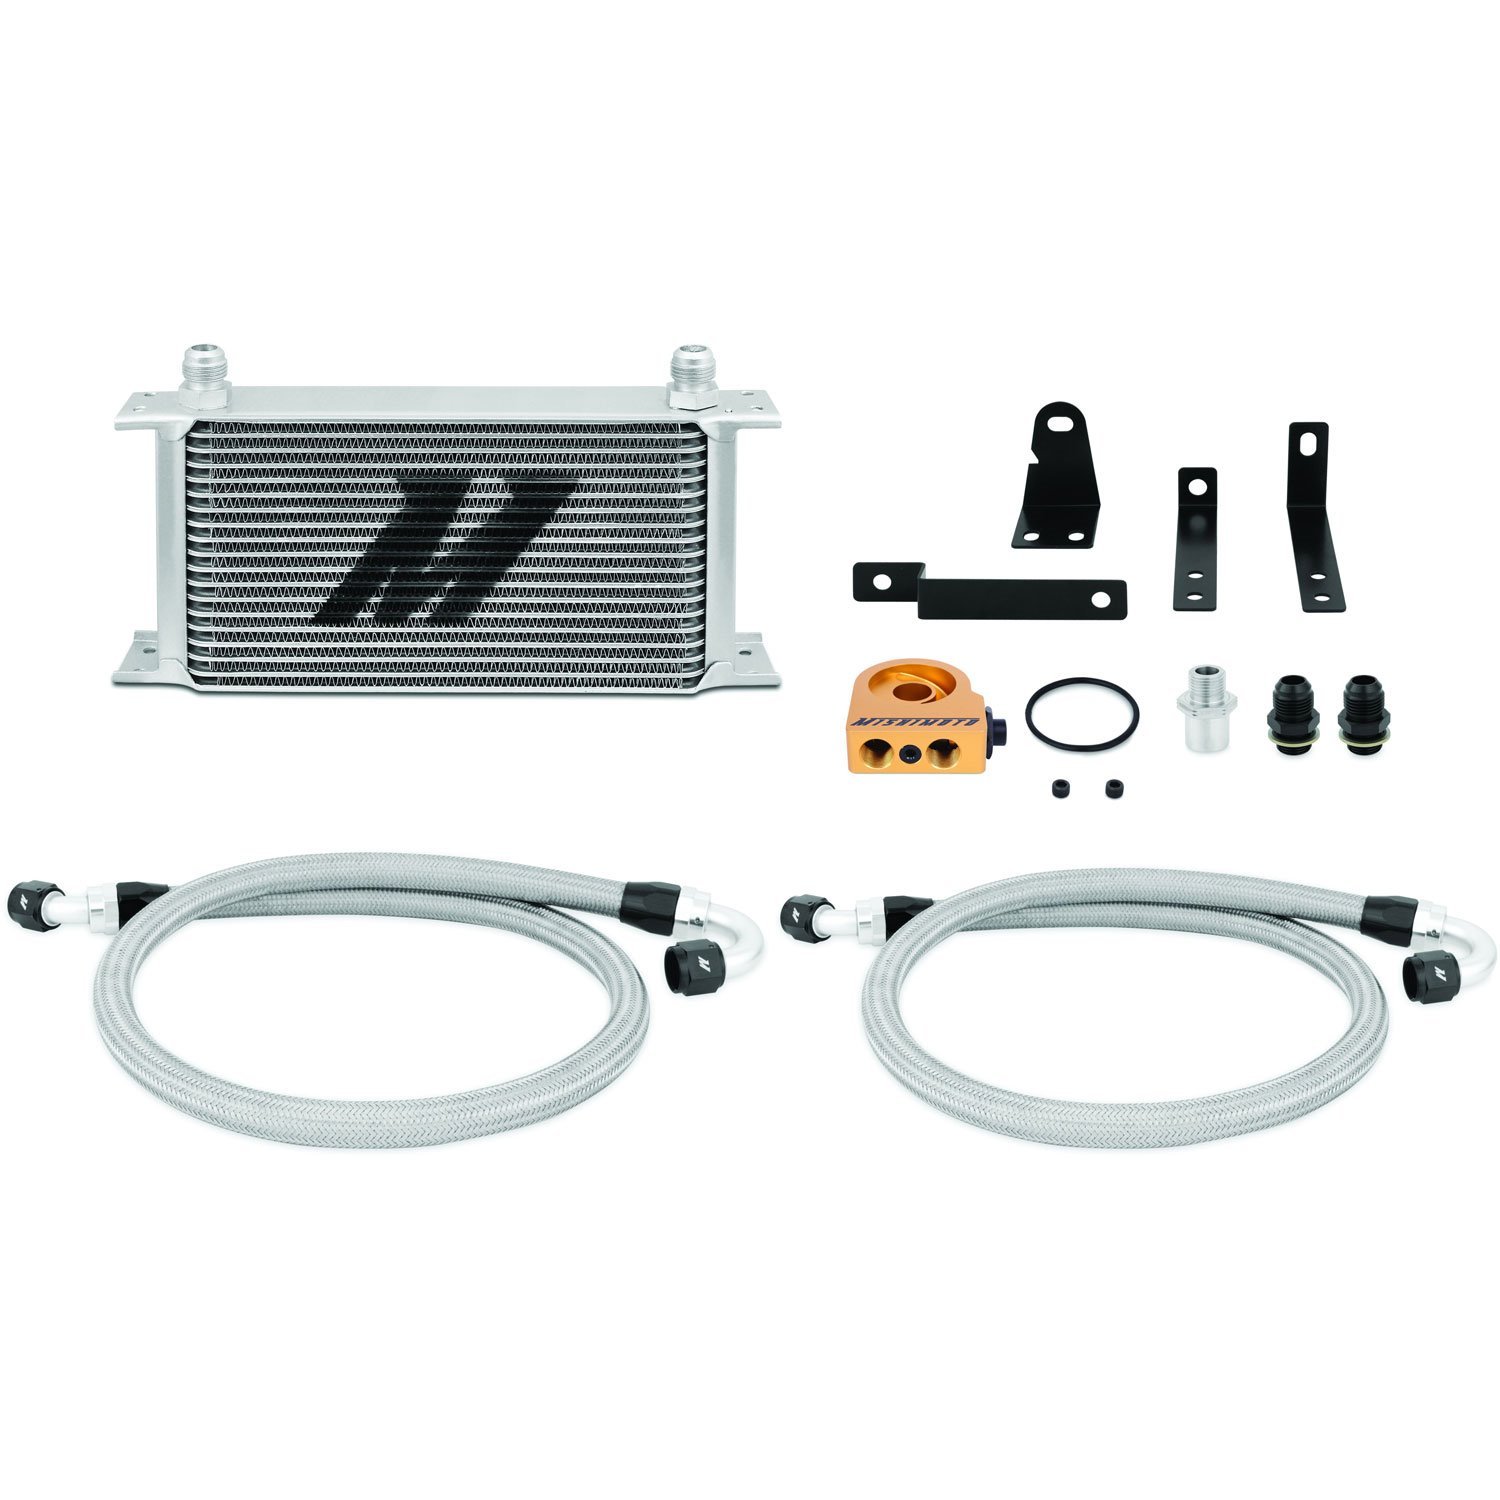 Honda S2000 Thermostatic Oil Cooler Kit - MFG Part No. MMOC-S2K-00T